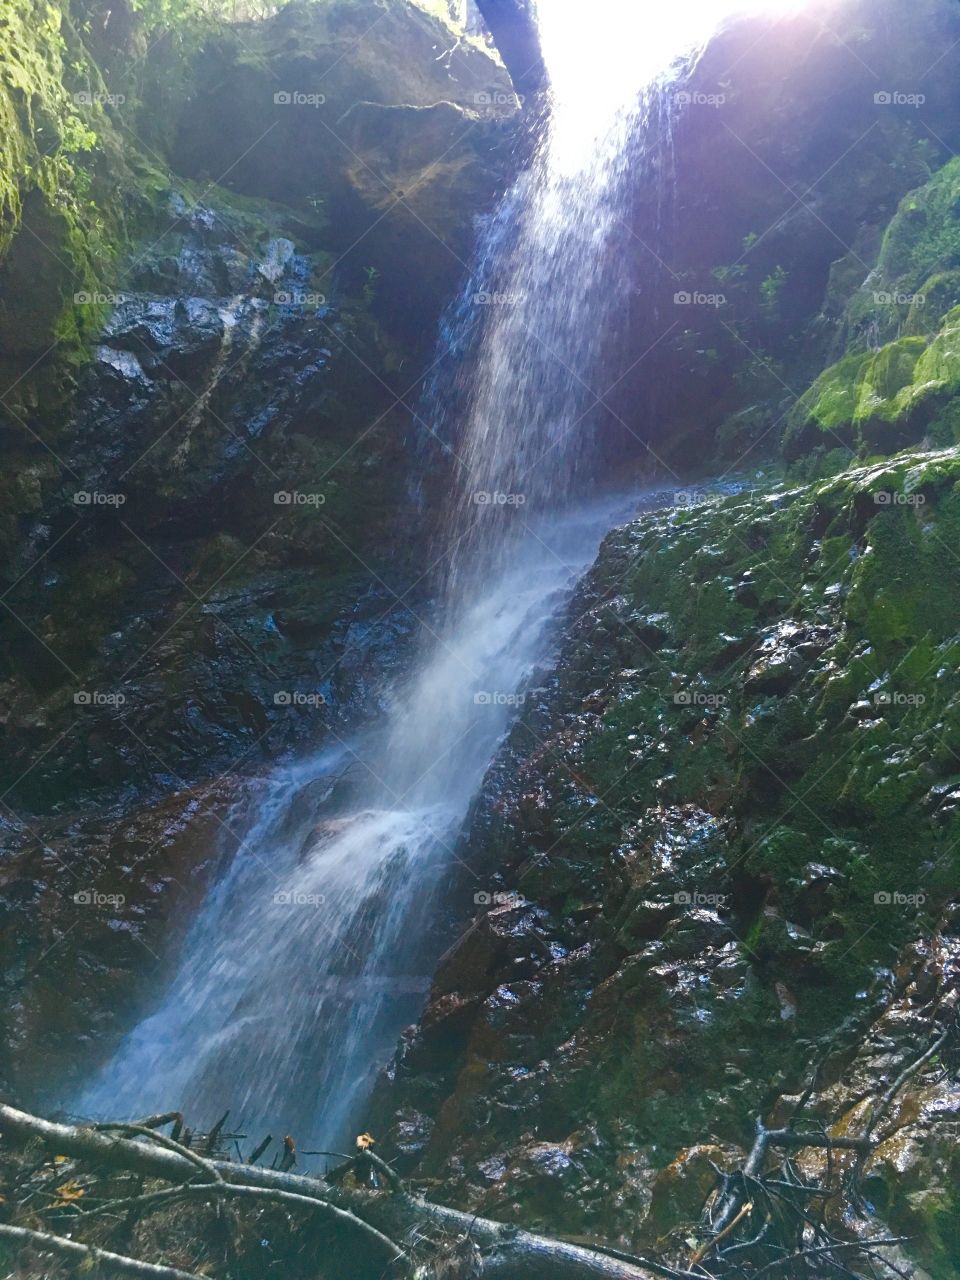 Tall Waterfall
